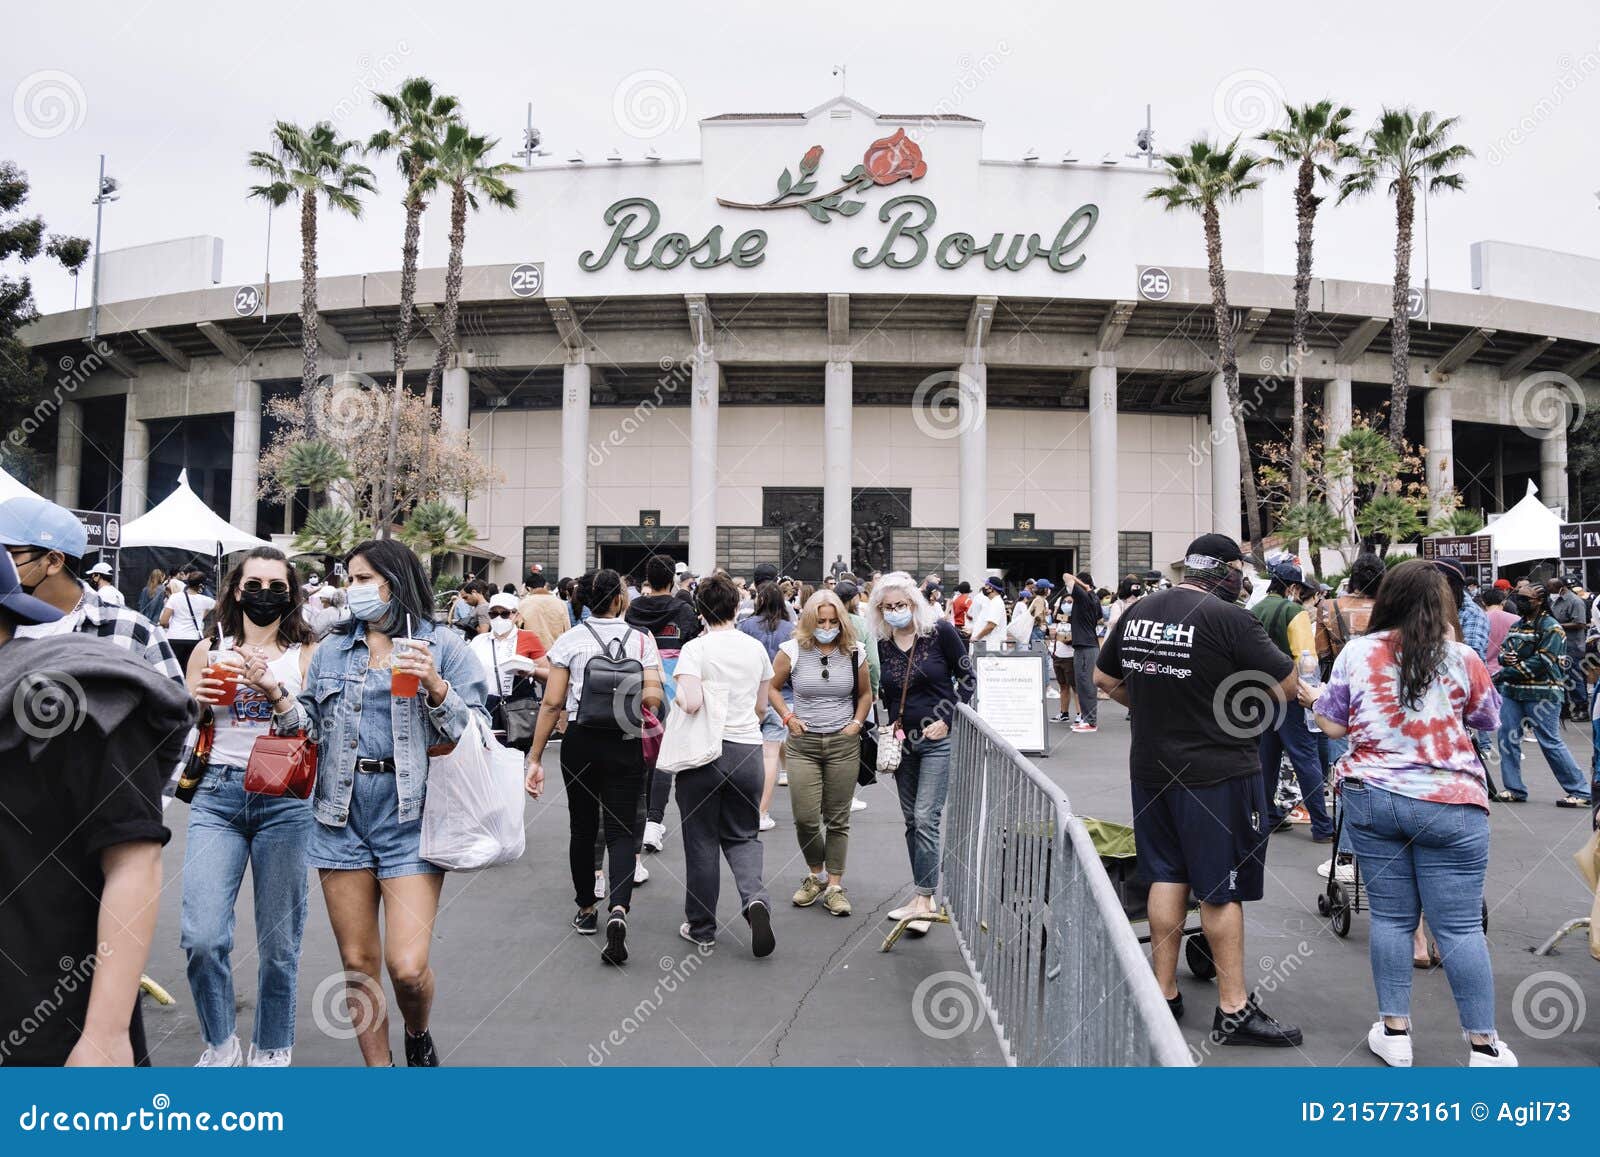 Pasadena Rose Bowl Flea Market with Stadium in View - Daytime ...